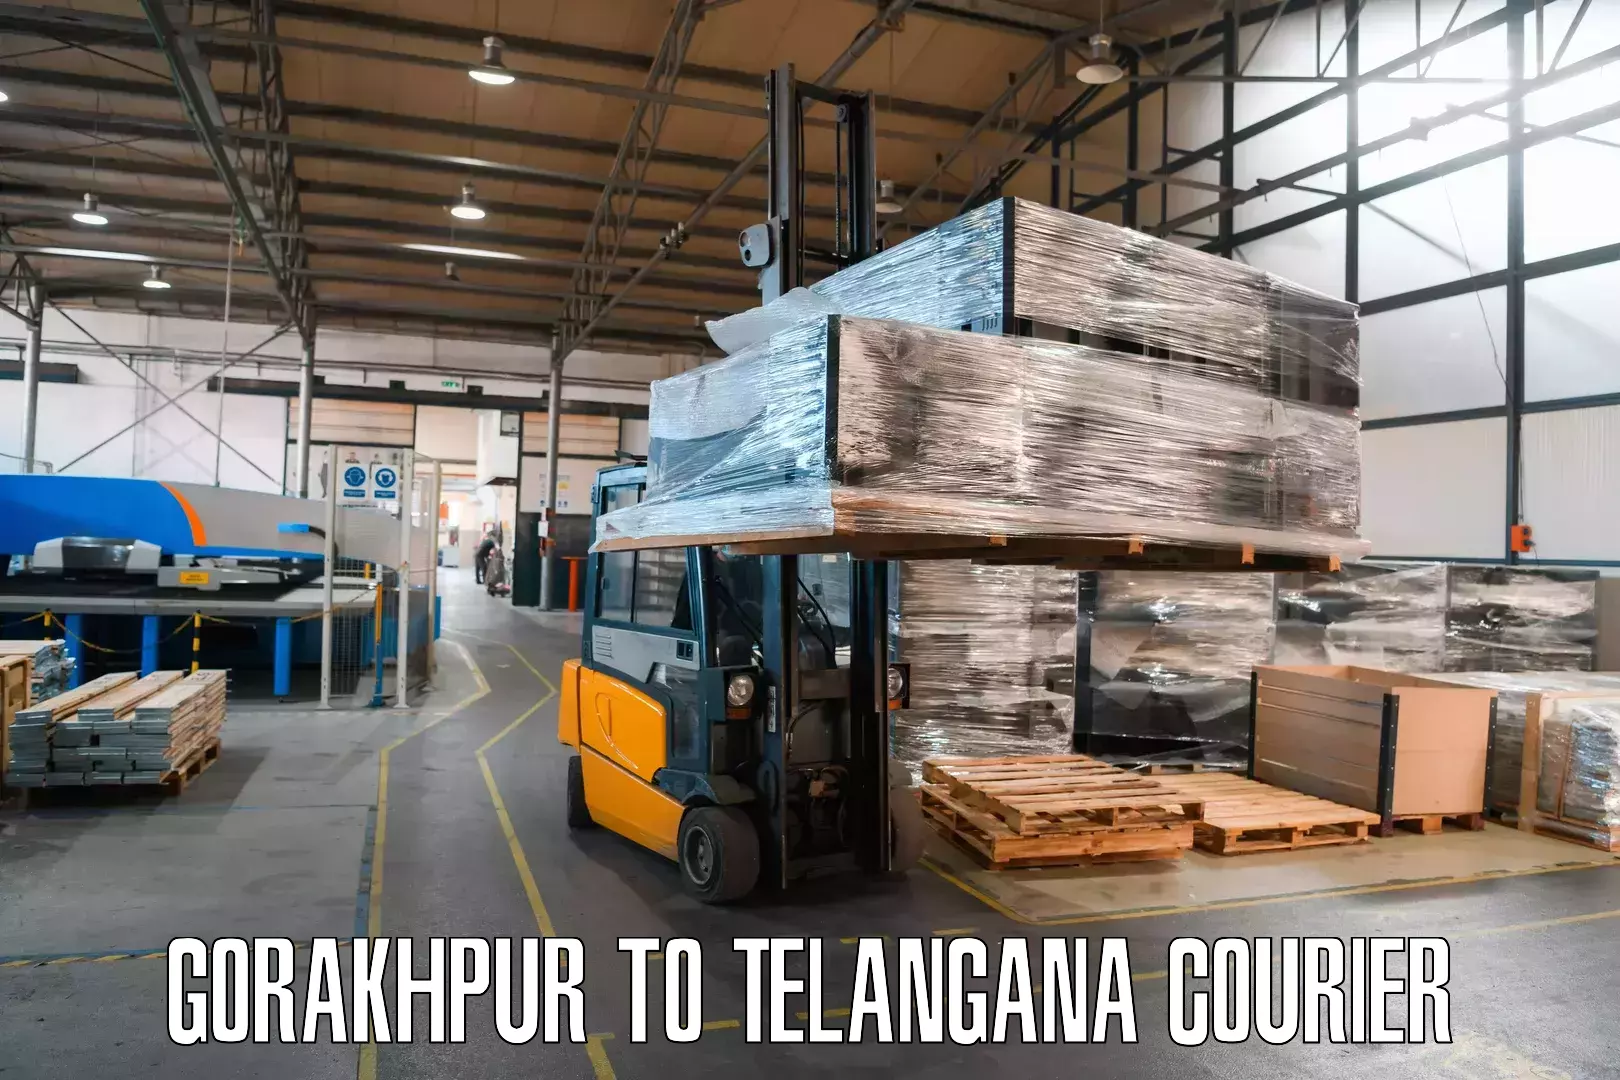 Digital courier platforms Gorakhpur to Marikal